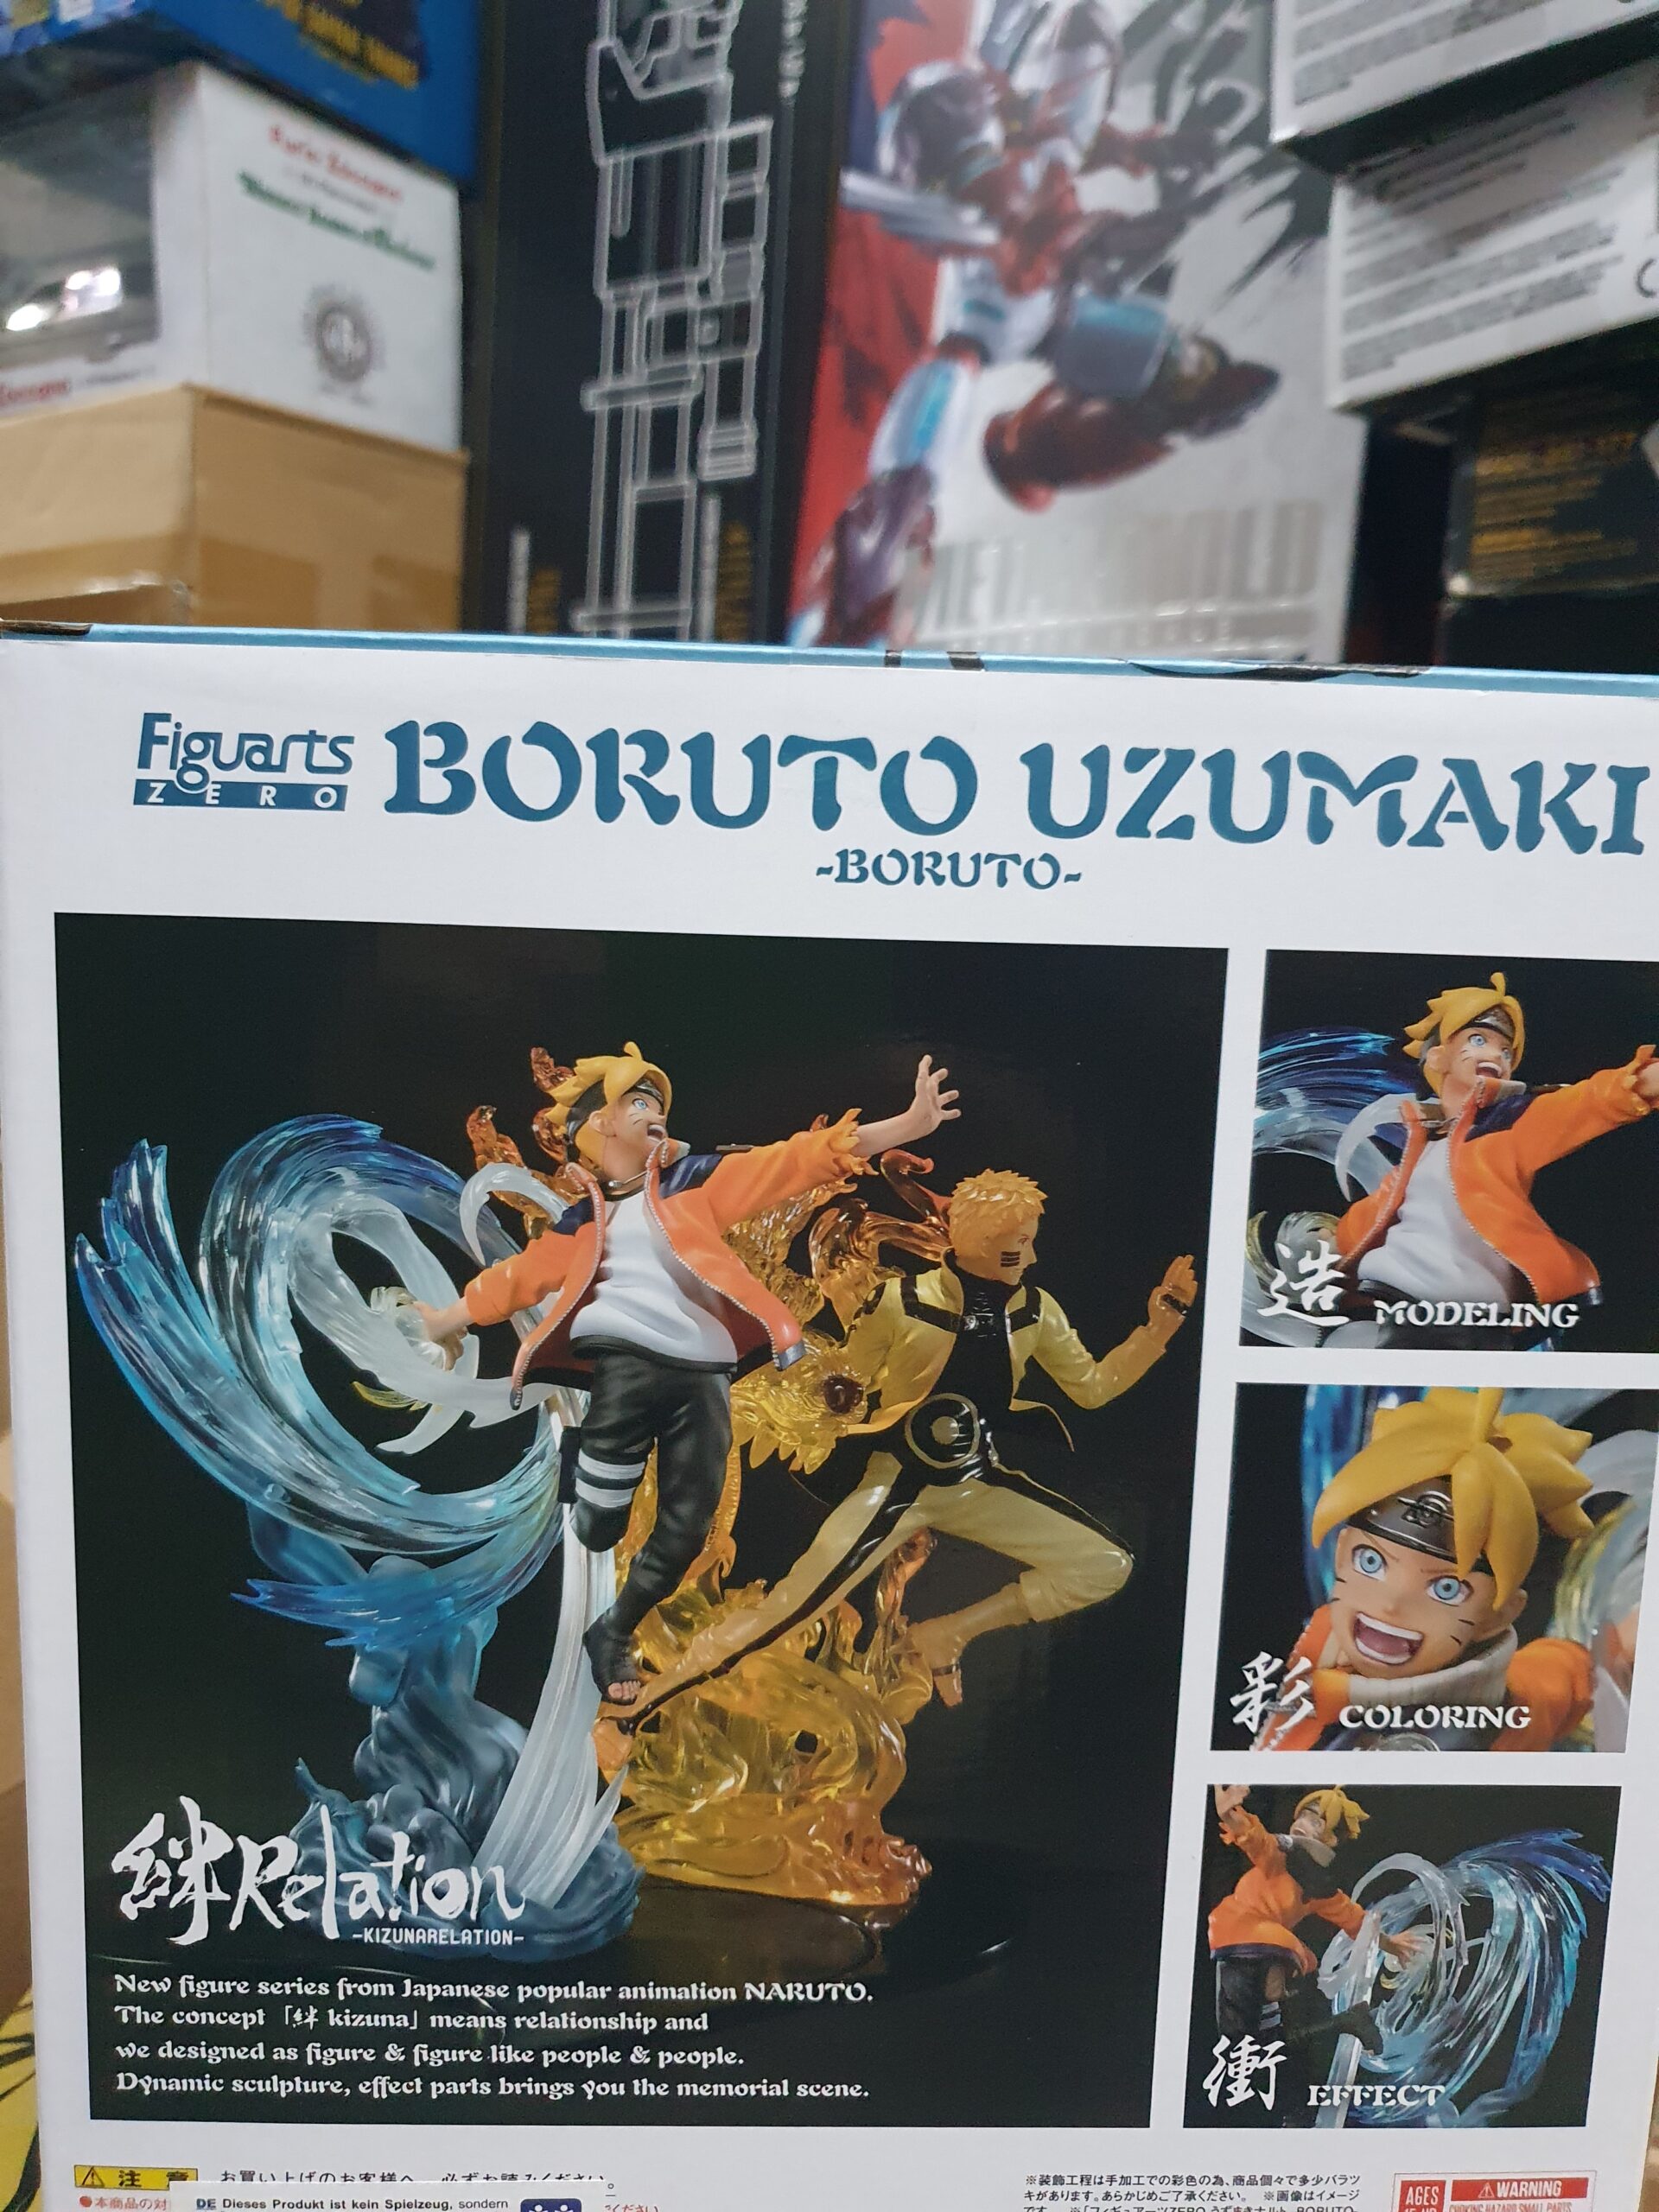 Boruto: Naruto Next Generation FiguartsZERO PVC Statue Boruto Uzumaki ( Boruto) Kizuna Relation 20 cm by Bandai - Millennium shop one